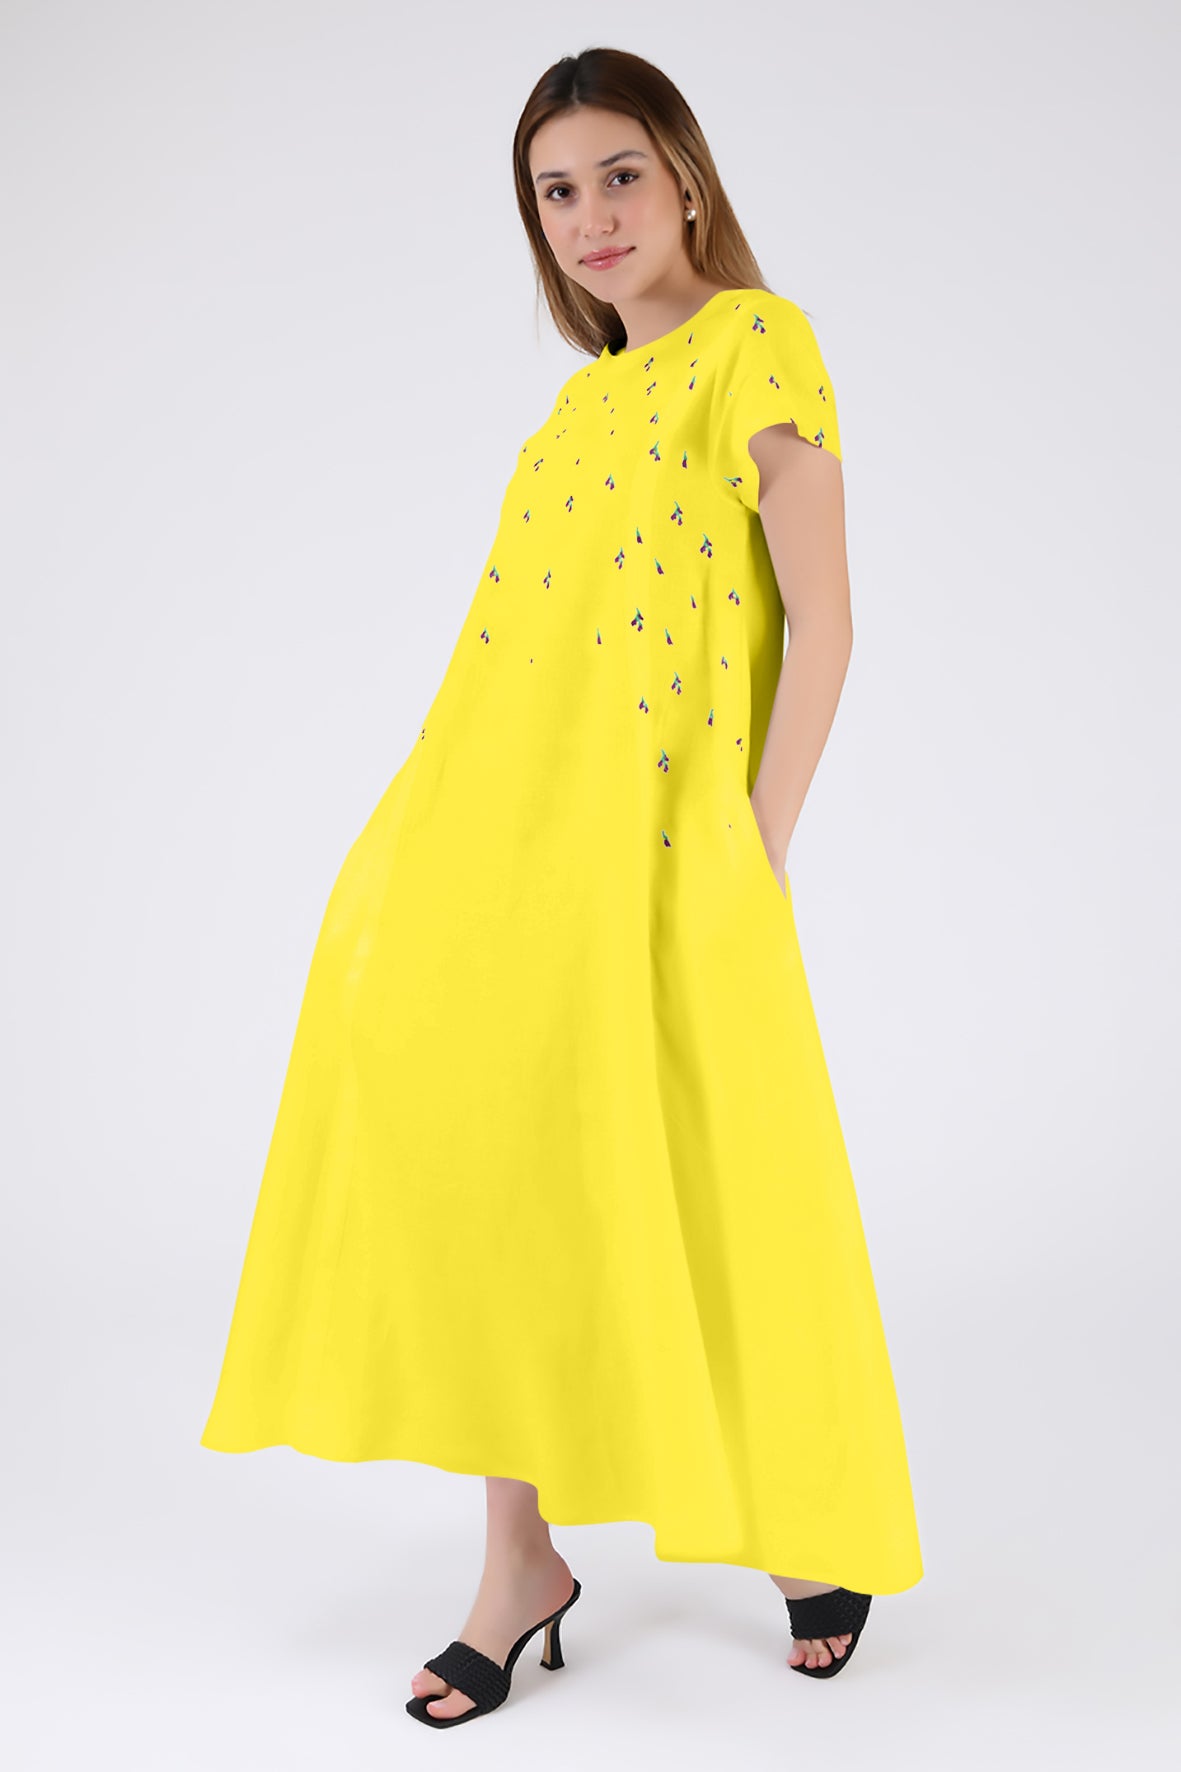 Valencia Dress in Bright Yellow by Fanm Mon